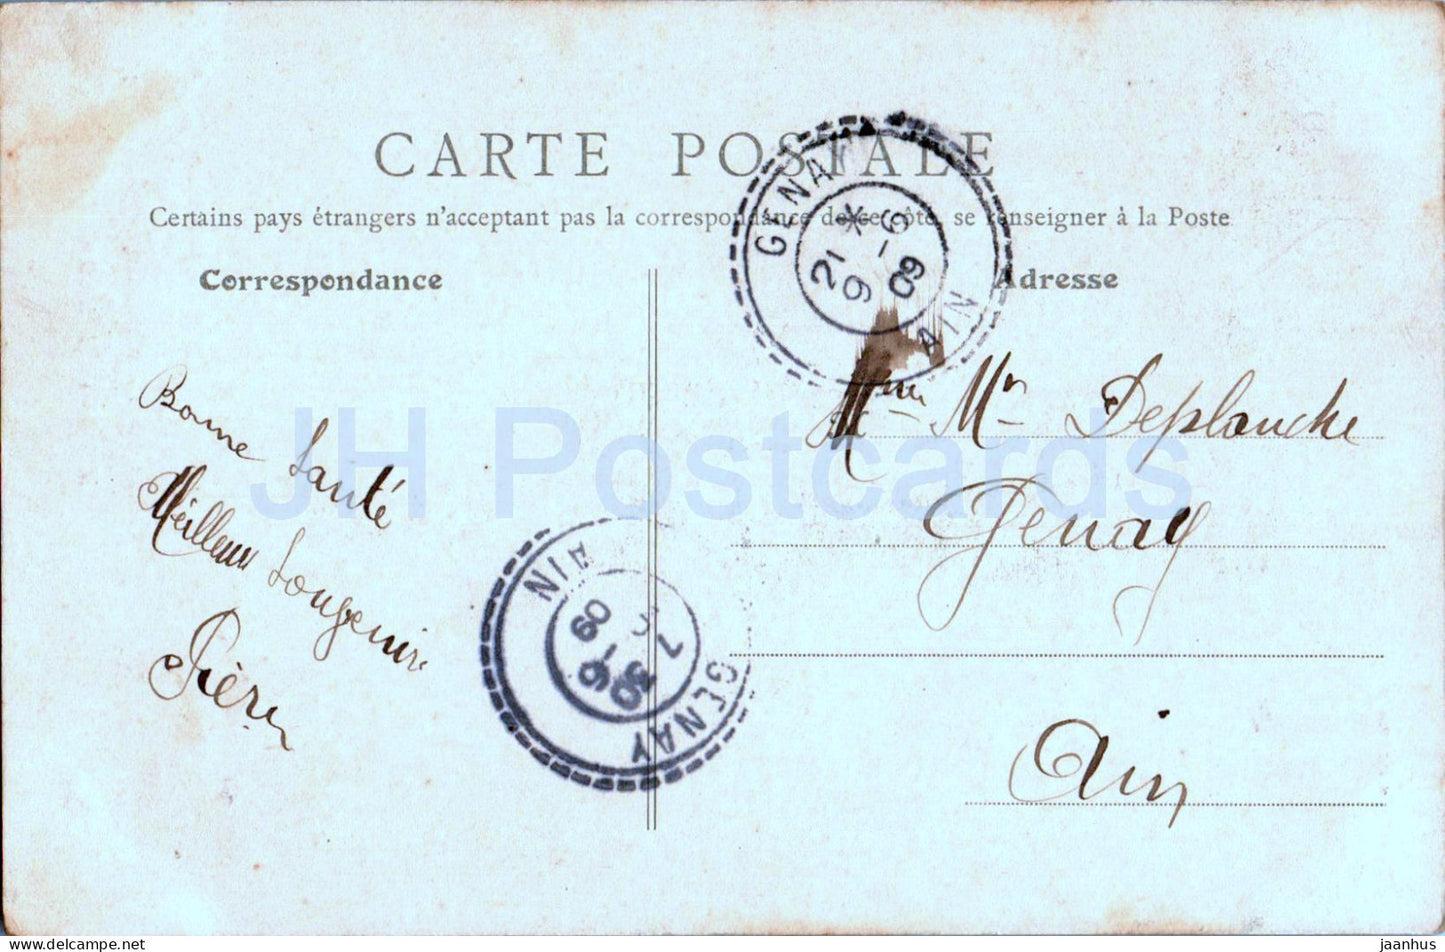 Ay Champagne - L'Eglise - La Champagne Illustree - 5 - Kirche - alte Postkarte - 1909 - Frankreich - gebraucht 